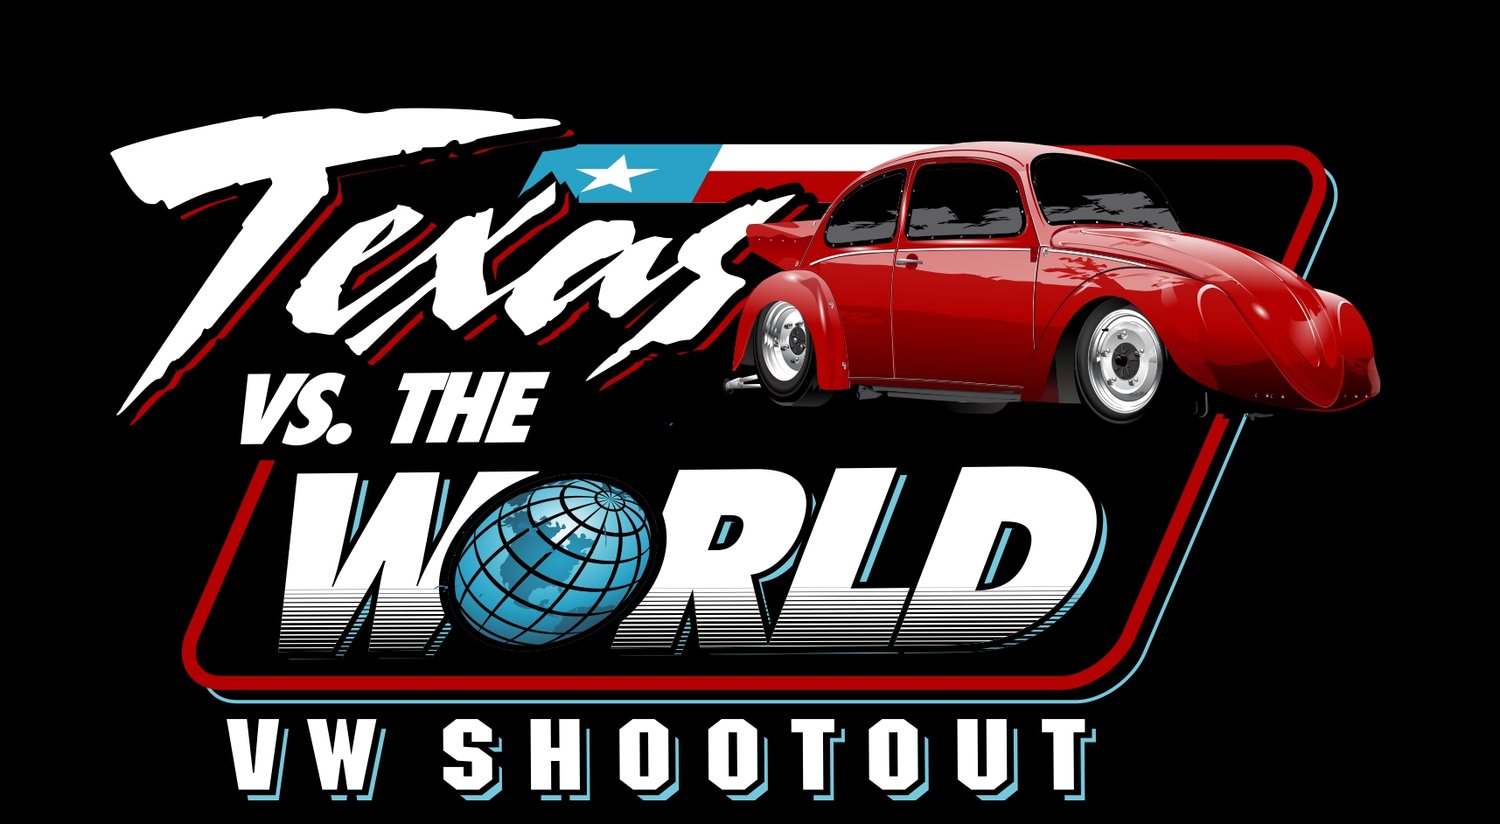 Texas Versus The World- VW Shootout